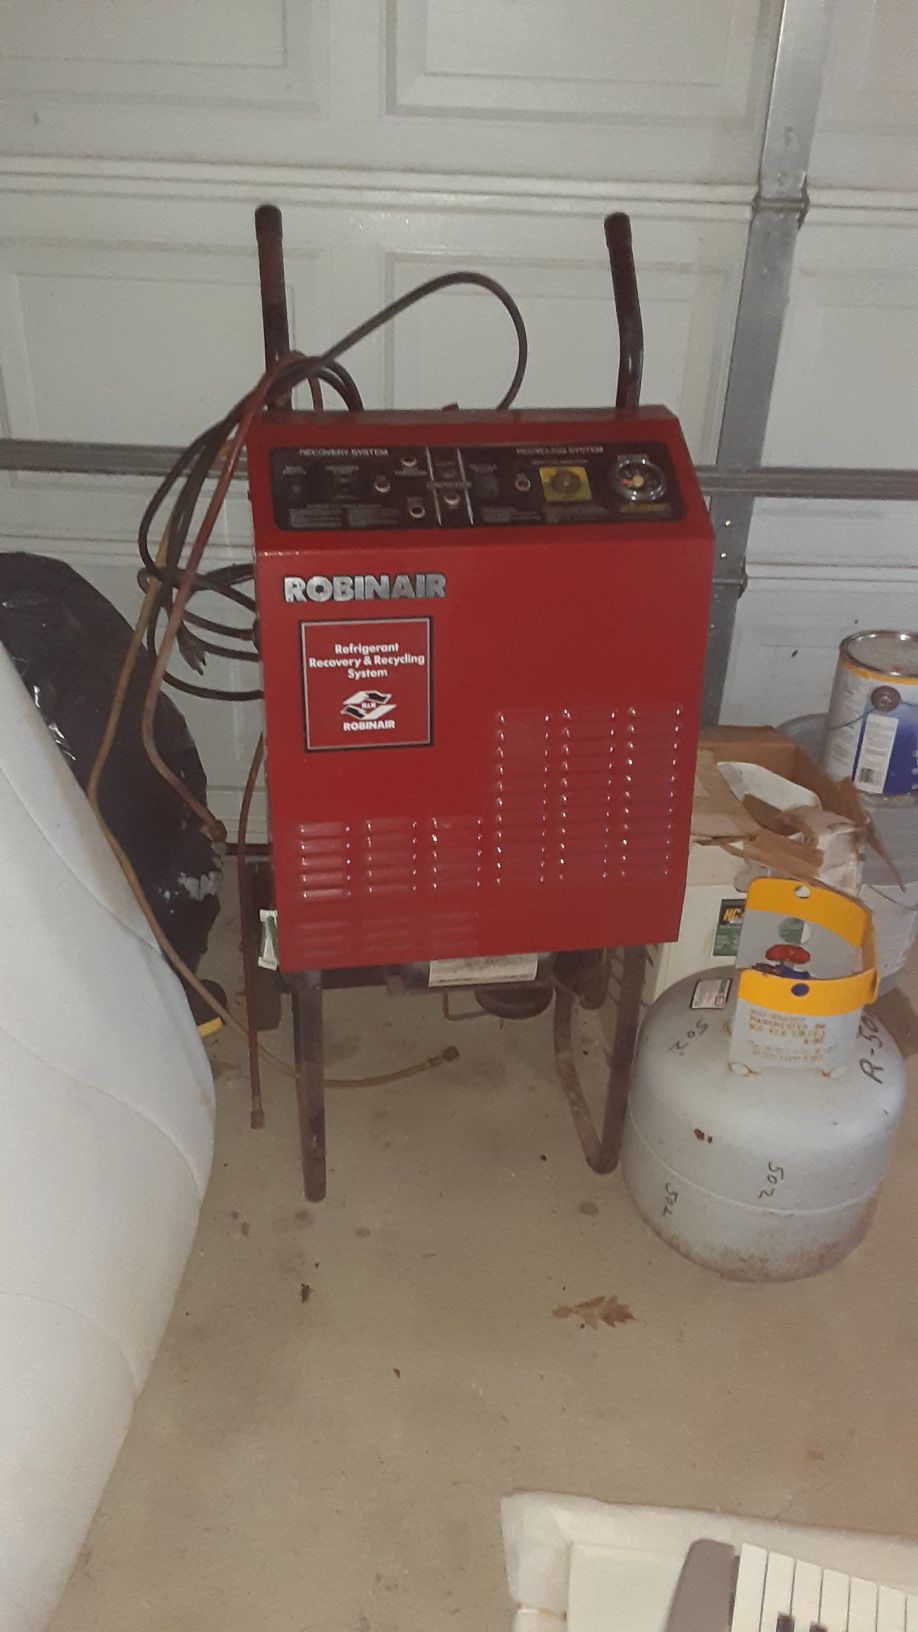 Robinair freon recovery machine